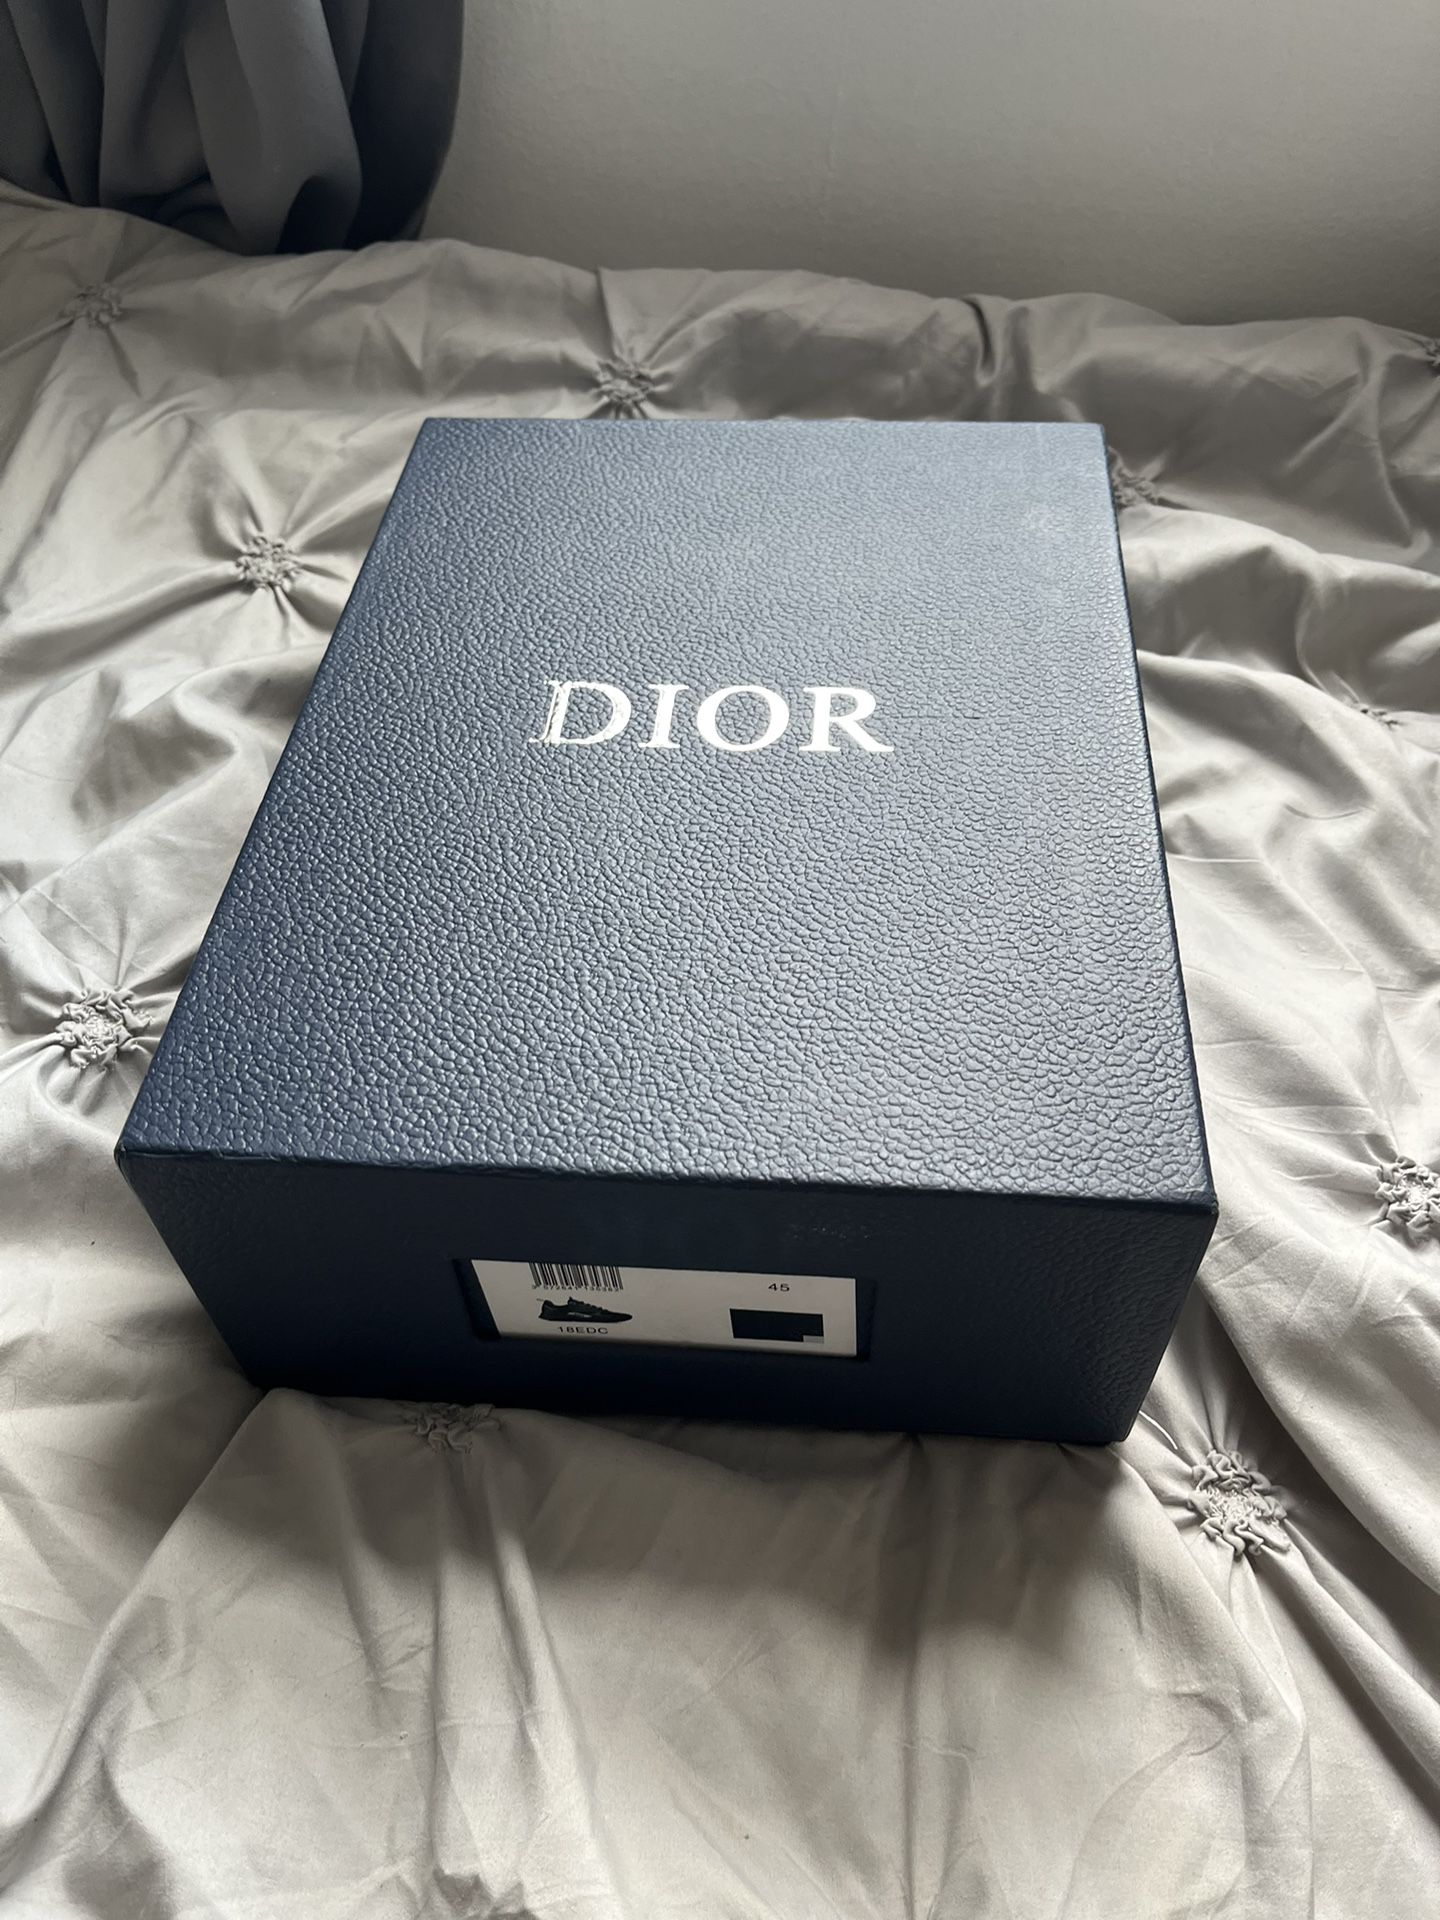 Dior b22 for Sale in Philadelphia, PA - OfferUp